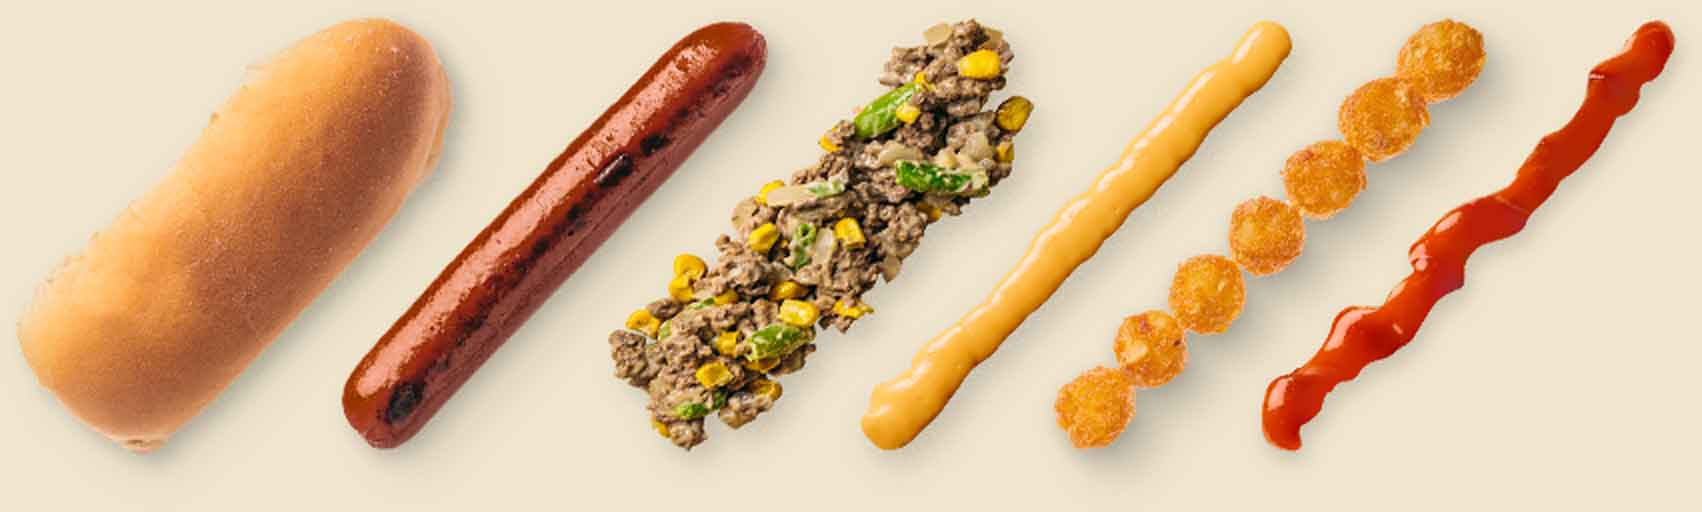 The ingredients: A Hot dog bun, hot dog, hotdish, Cheez Whiz, deep-fried tater tots and ketchup.